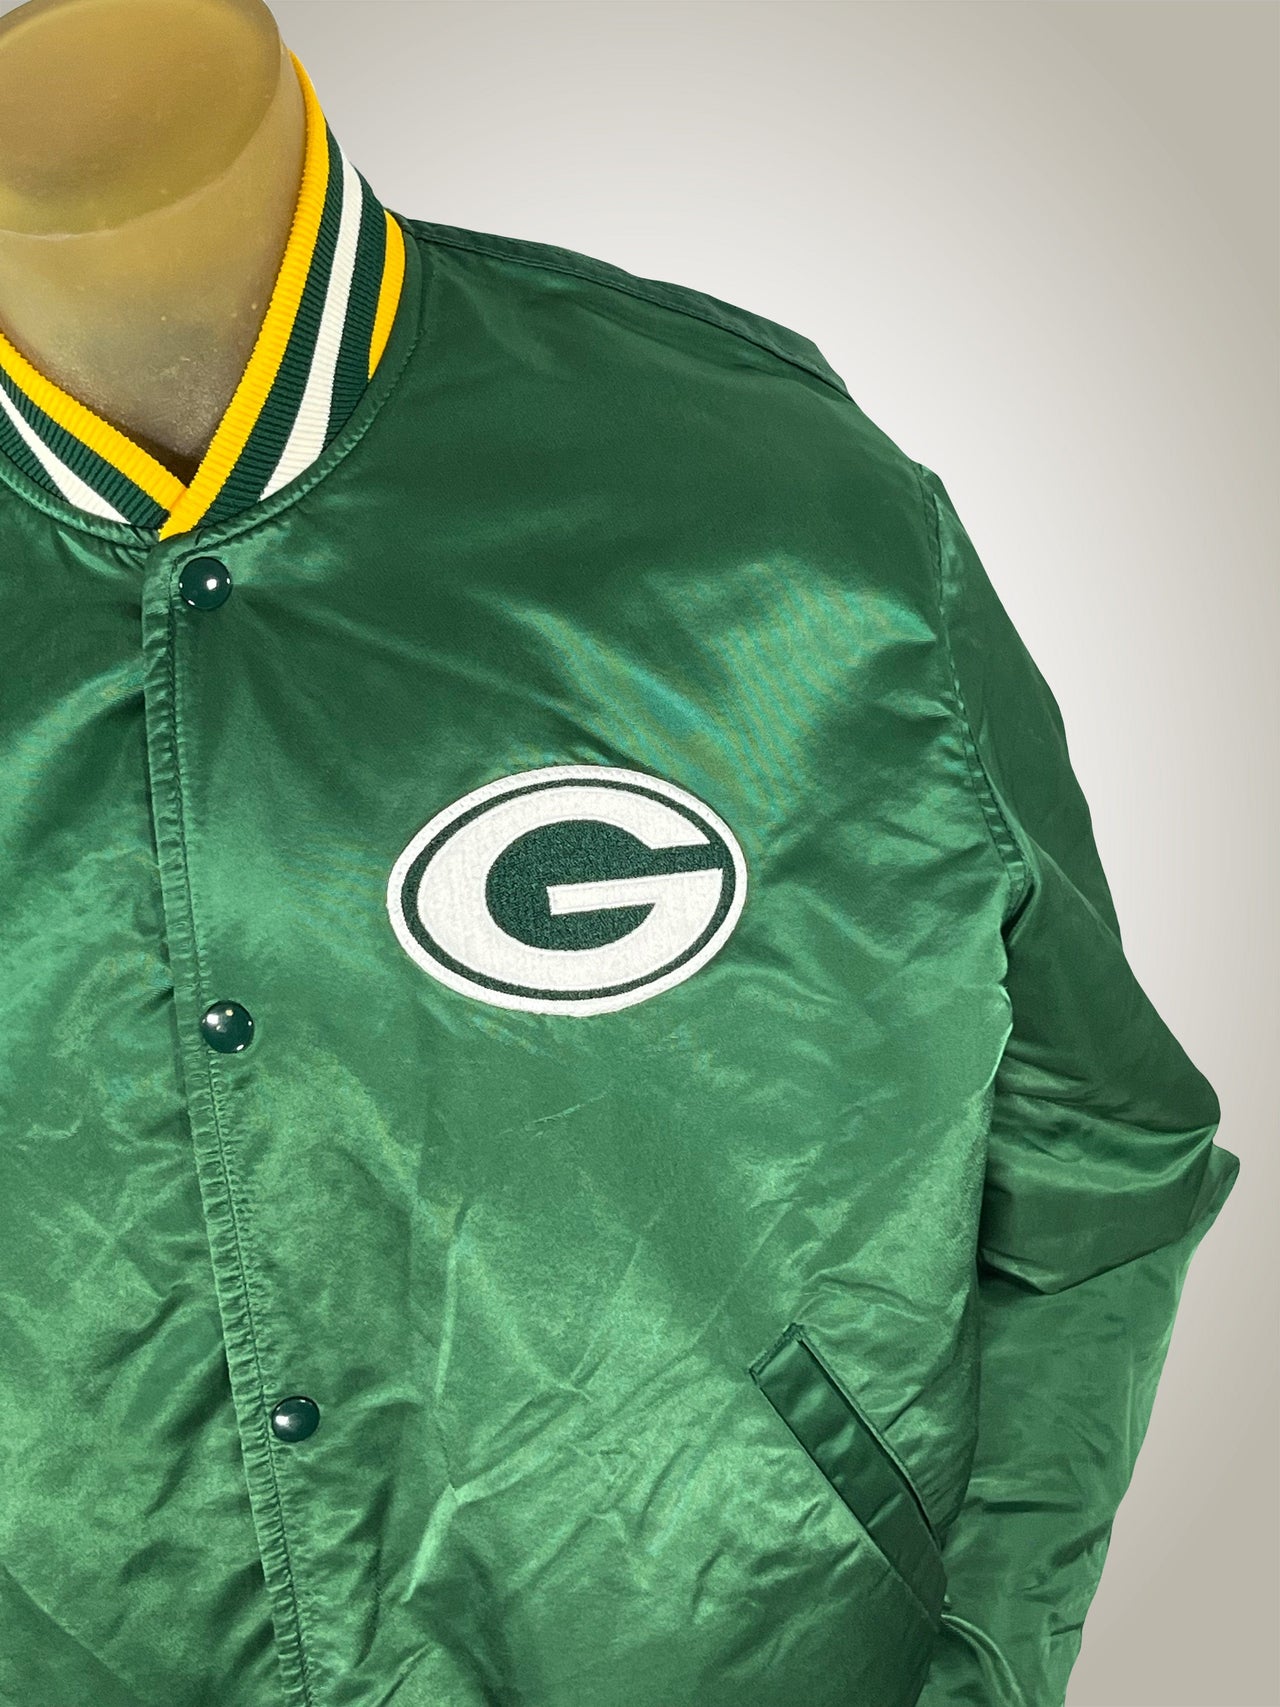 Gameday Grails Jersey Medium Vintage Green Bay Packers Starter Jacket